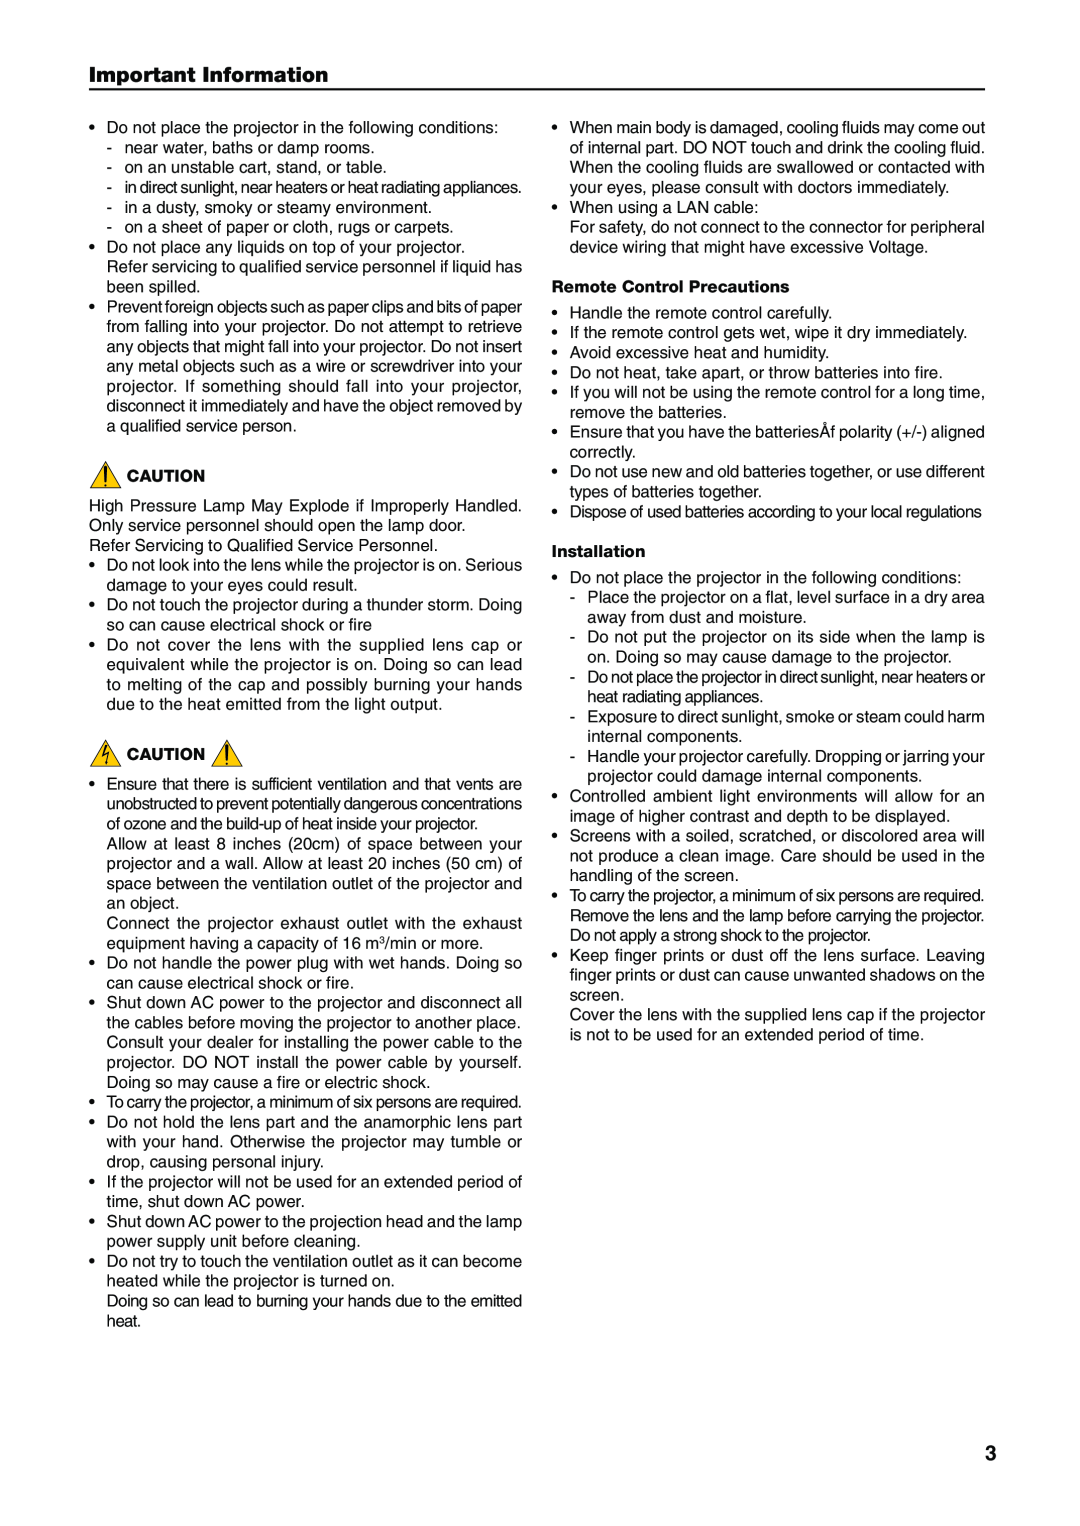 NEC NC1600C user manual Important Information, Remote Control Precautions, Installation 